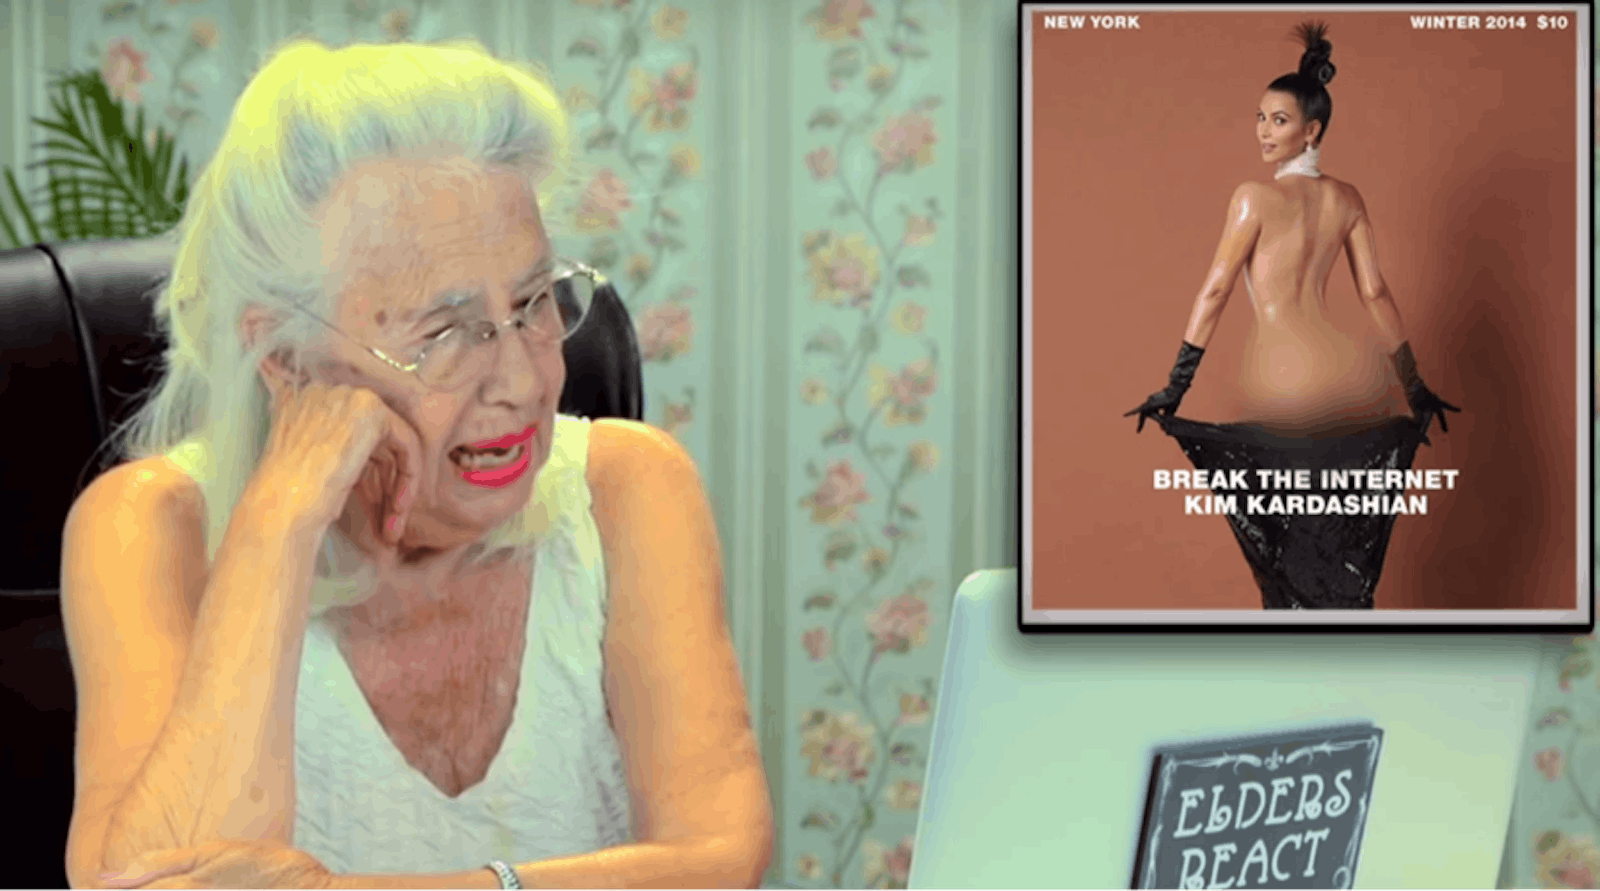 Old People Reacting To Kim Kardashians Attempt To Break The Internet